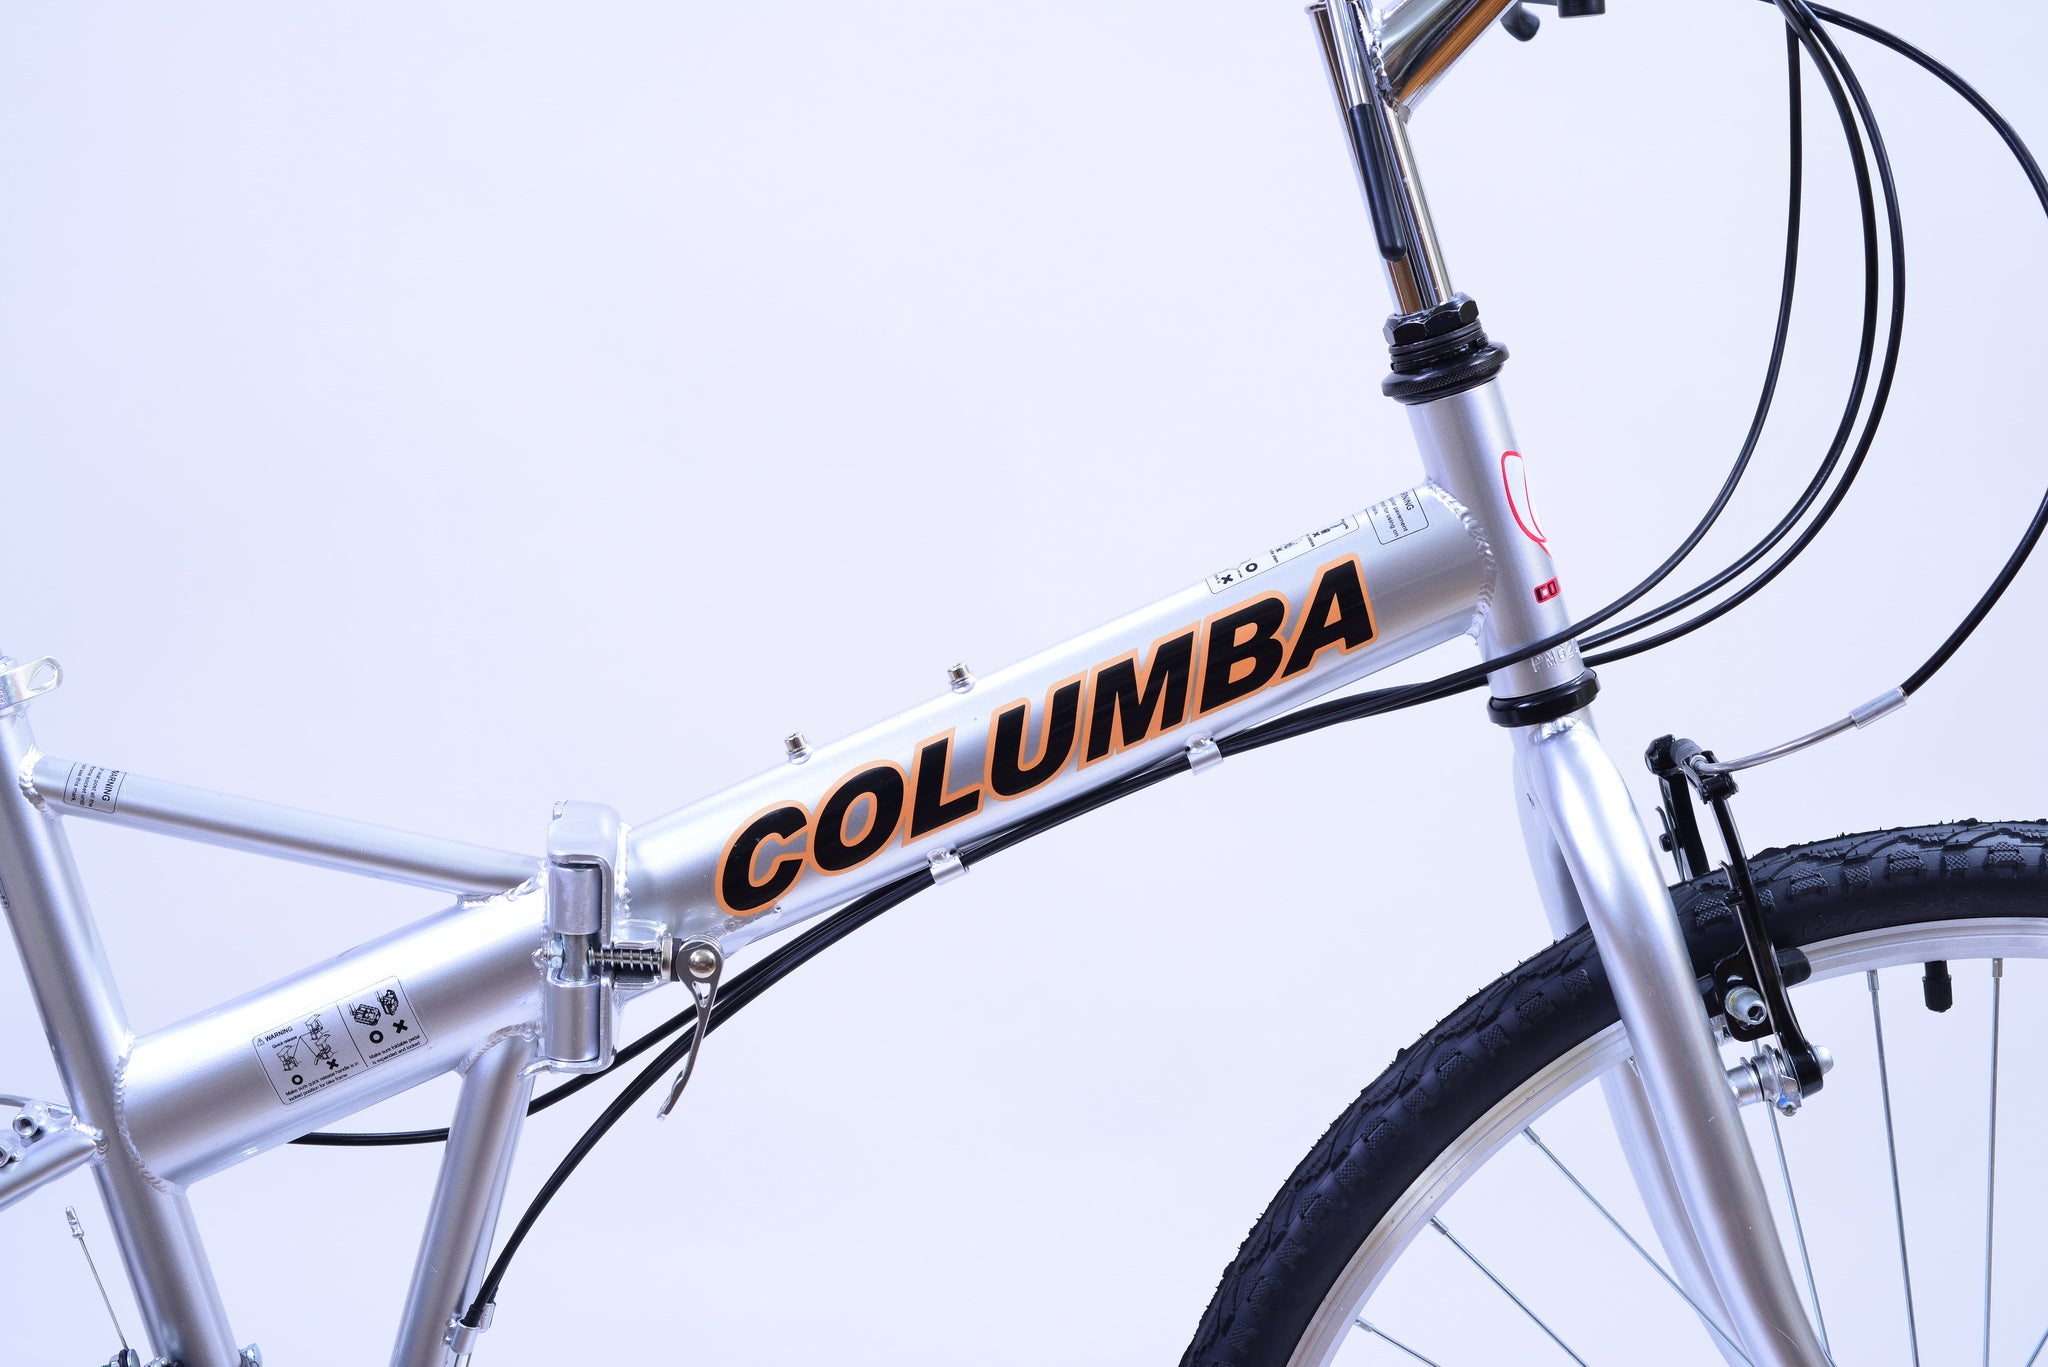 Silver folding bike tube that reads "Columba."